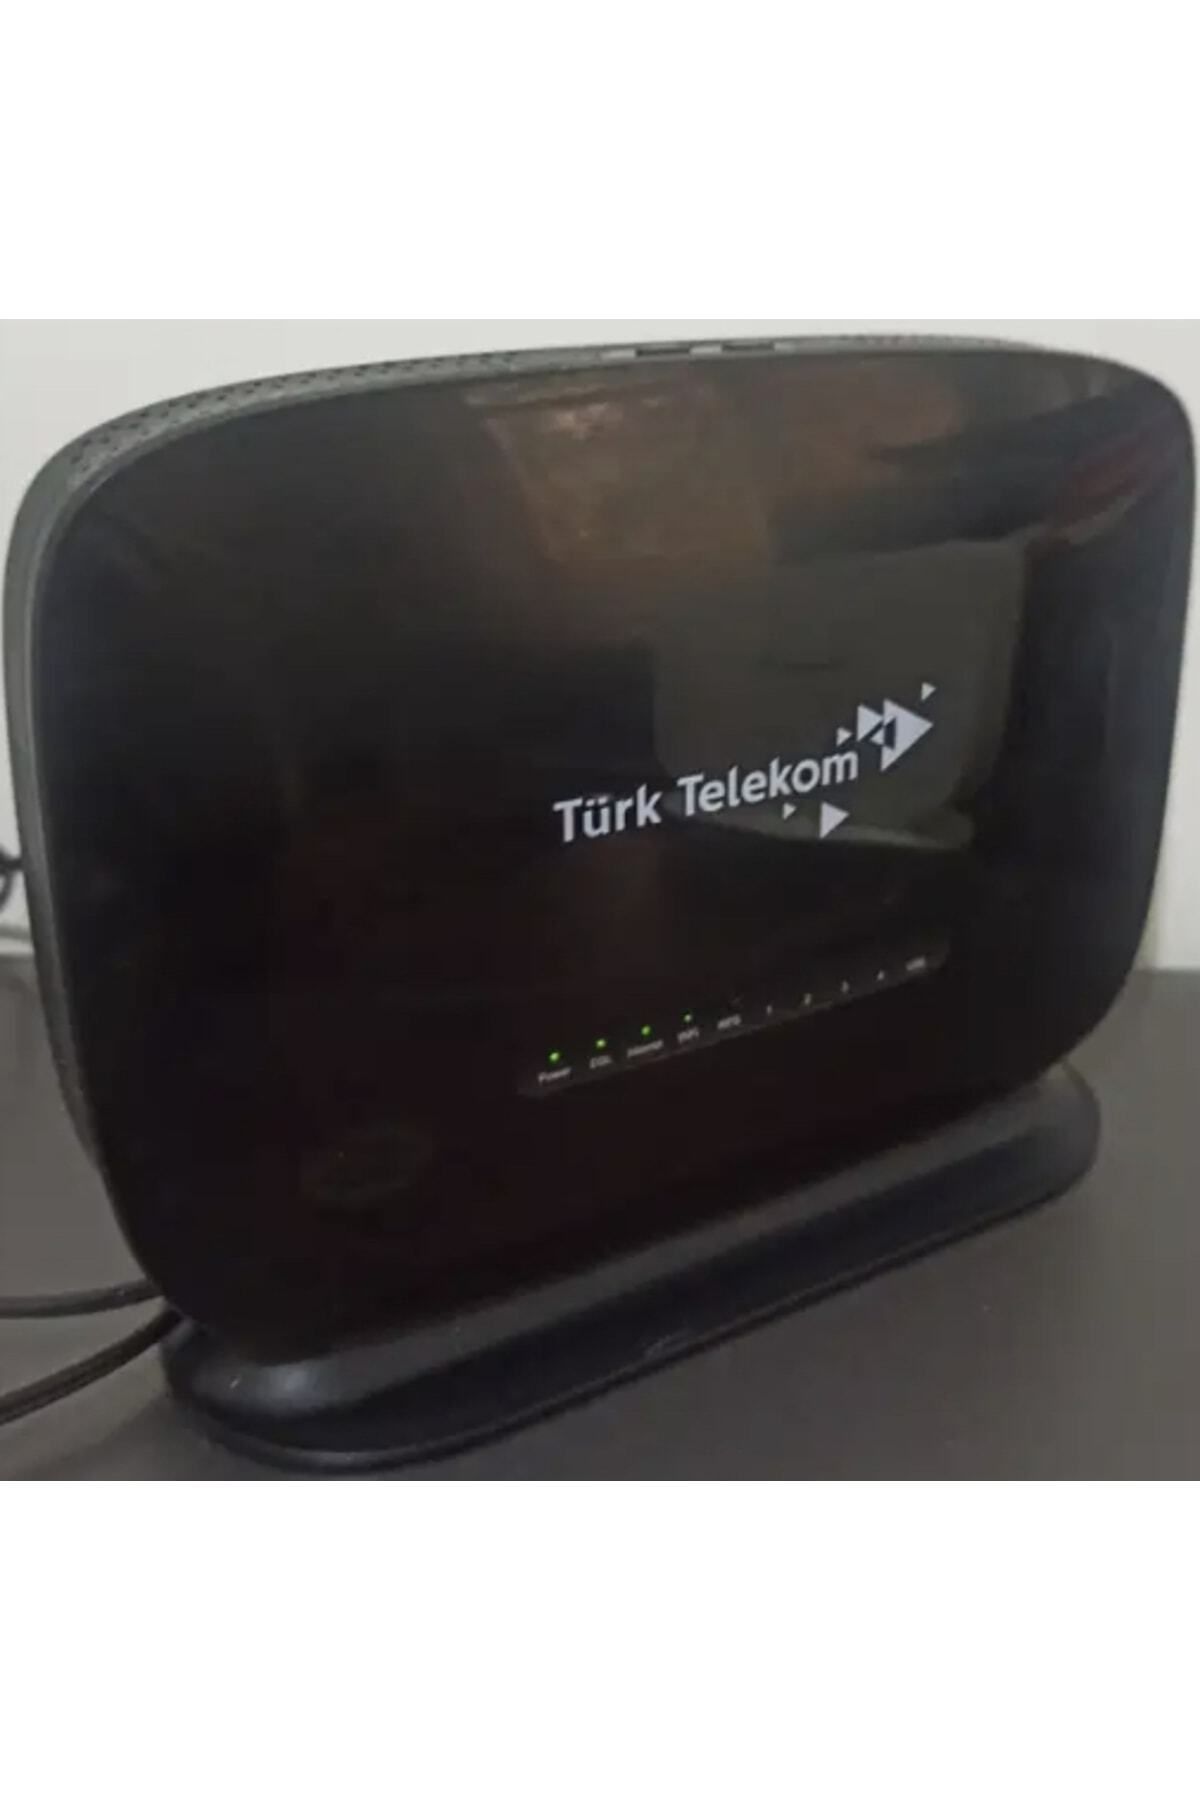 Türk Telekom Tp-lınk Vn020 G2u Vdsl2 Adsl2 Modem Router (refurbıshed-yenilenmiş)